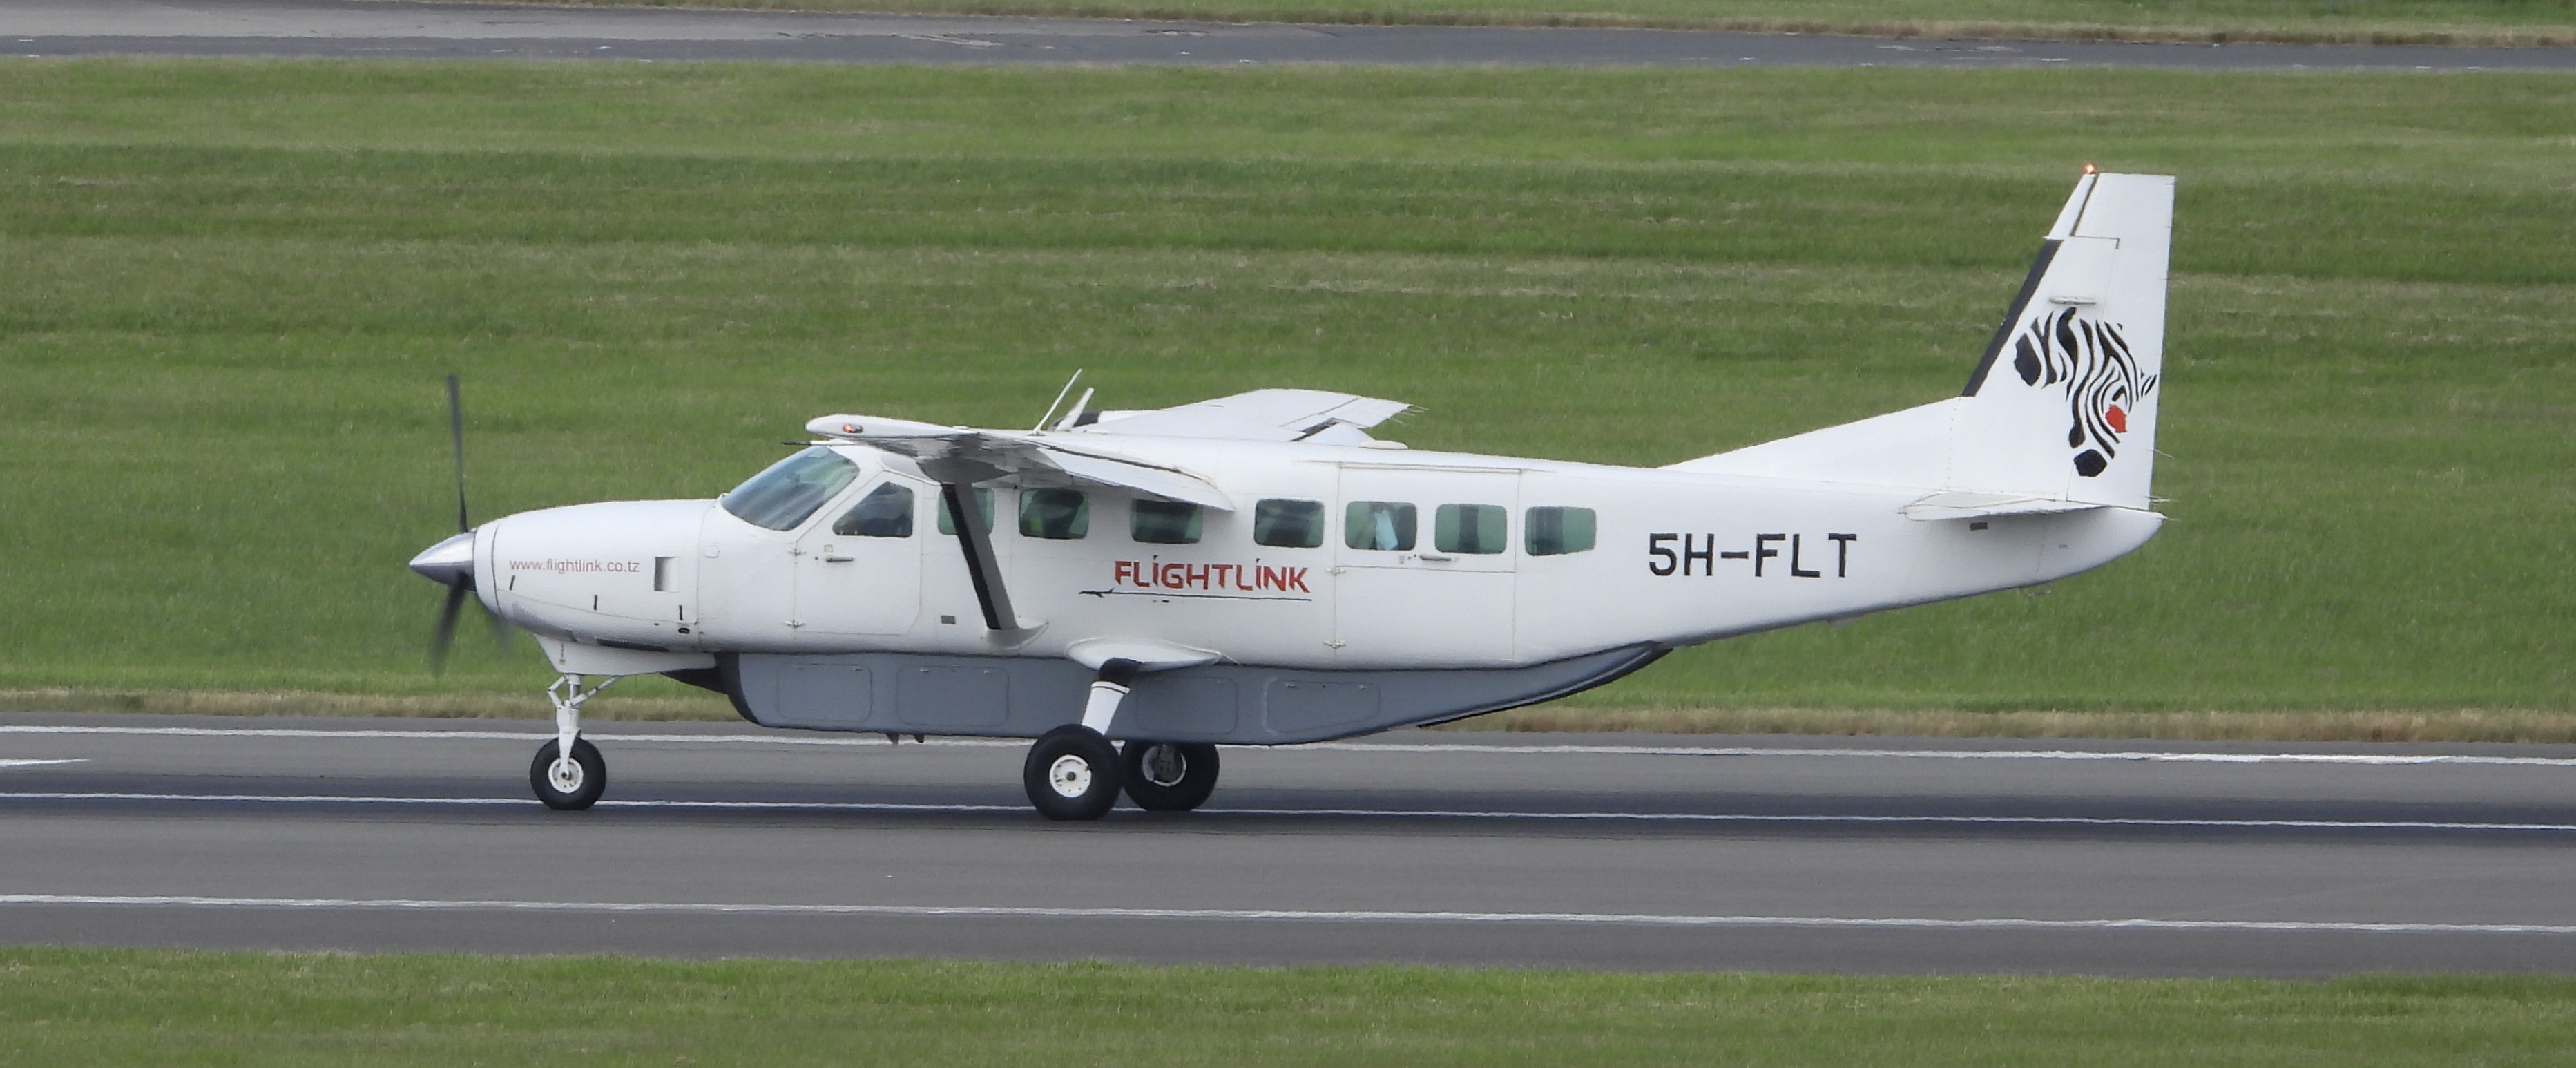 5H-FLT/5HFLT Private Cessna 208 Caravan Airframe Information - AVSpotters.com